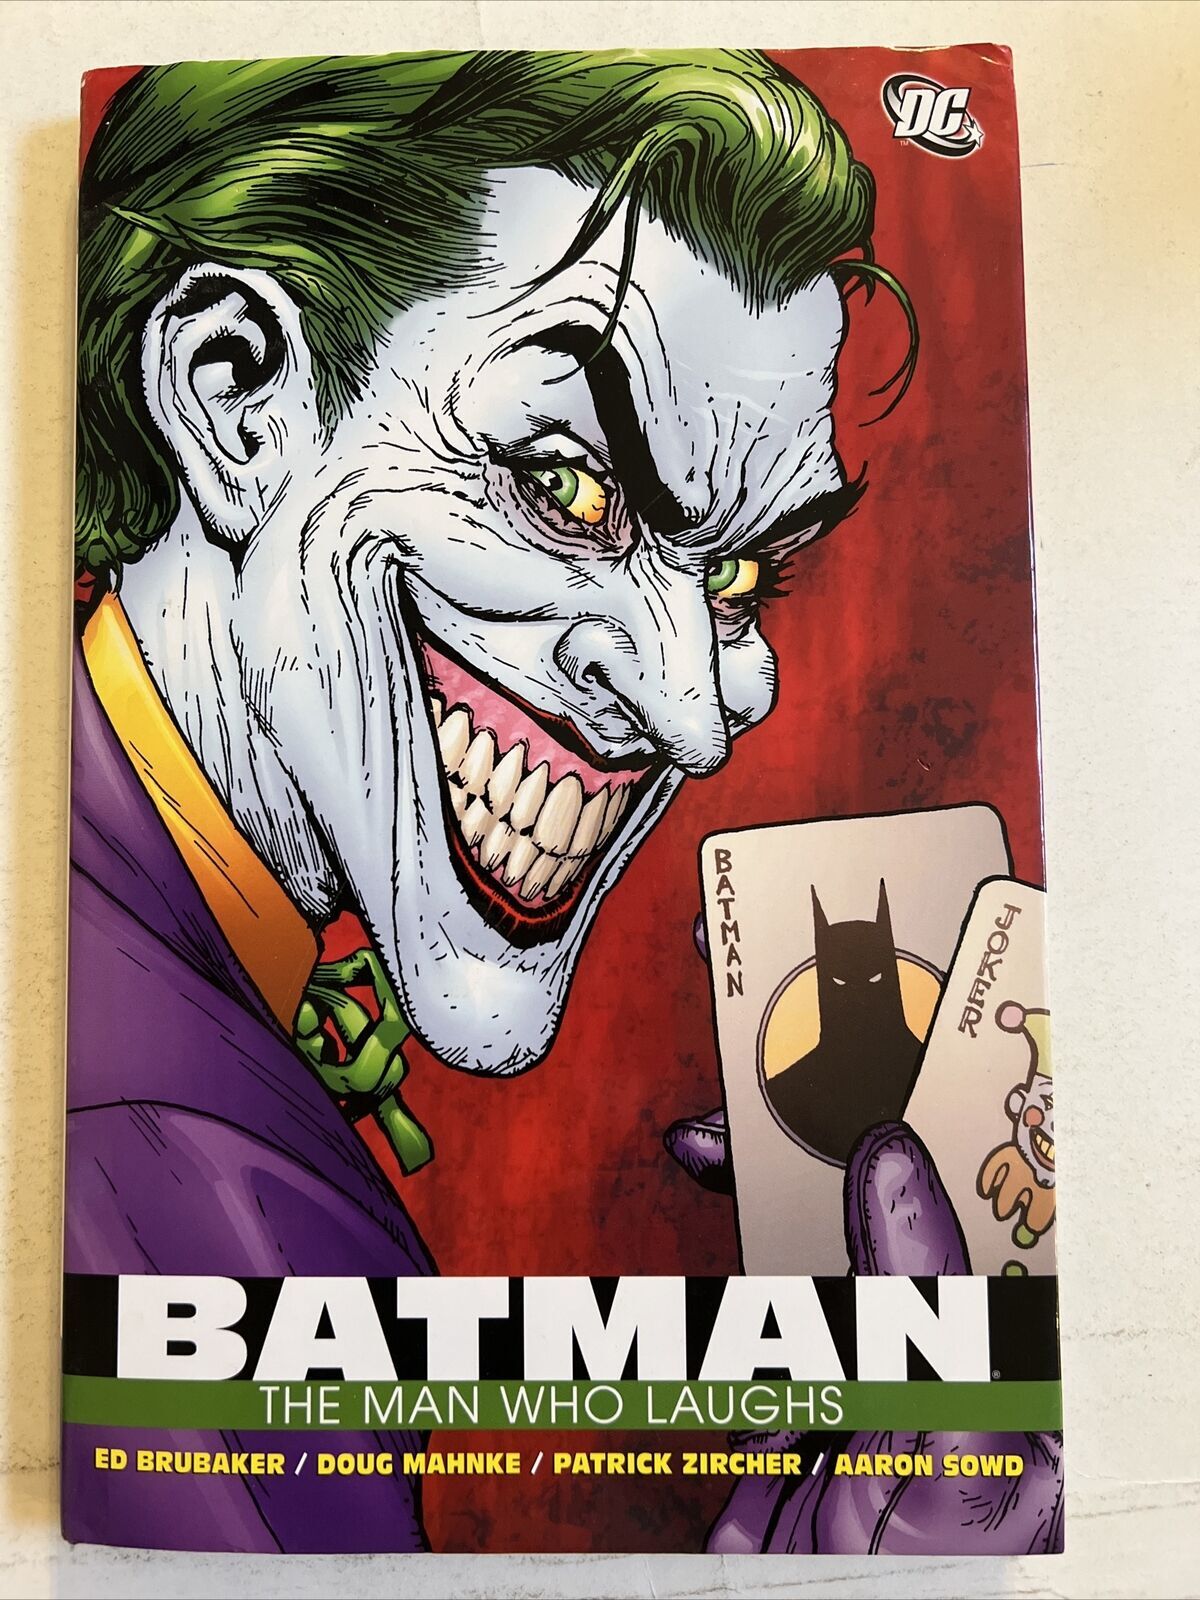 BATMAN THE MAN WHO LAUGHS Graphic Novel DC 2005 Ed Brubaker Dust Cover ...